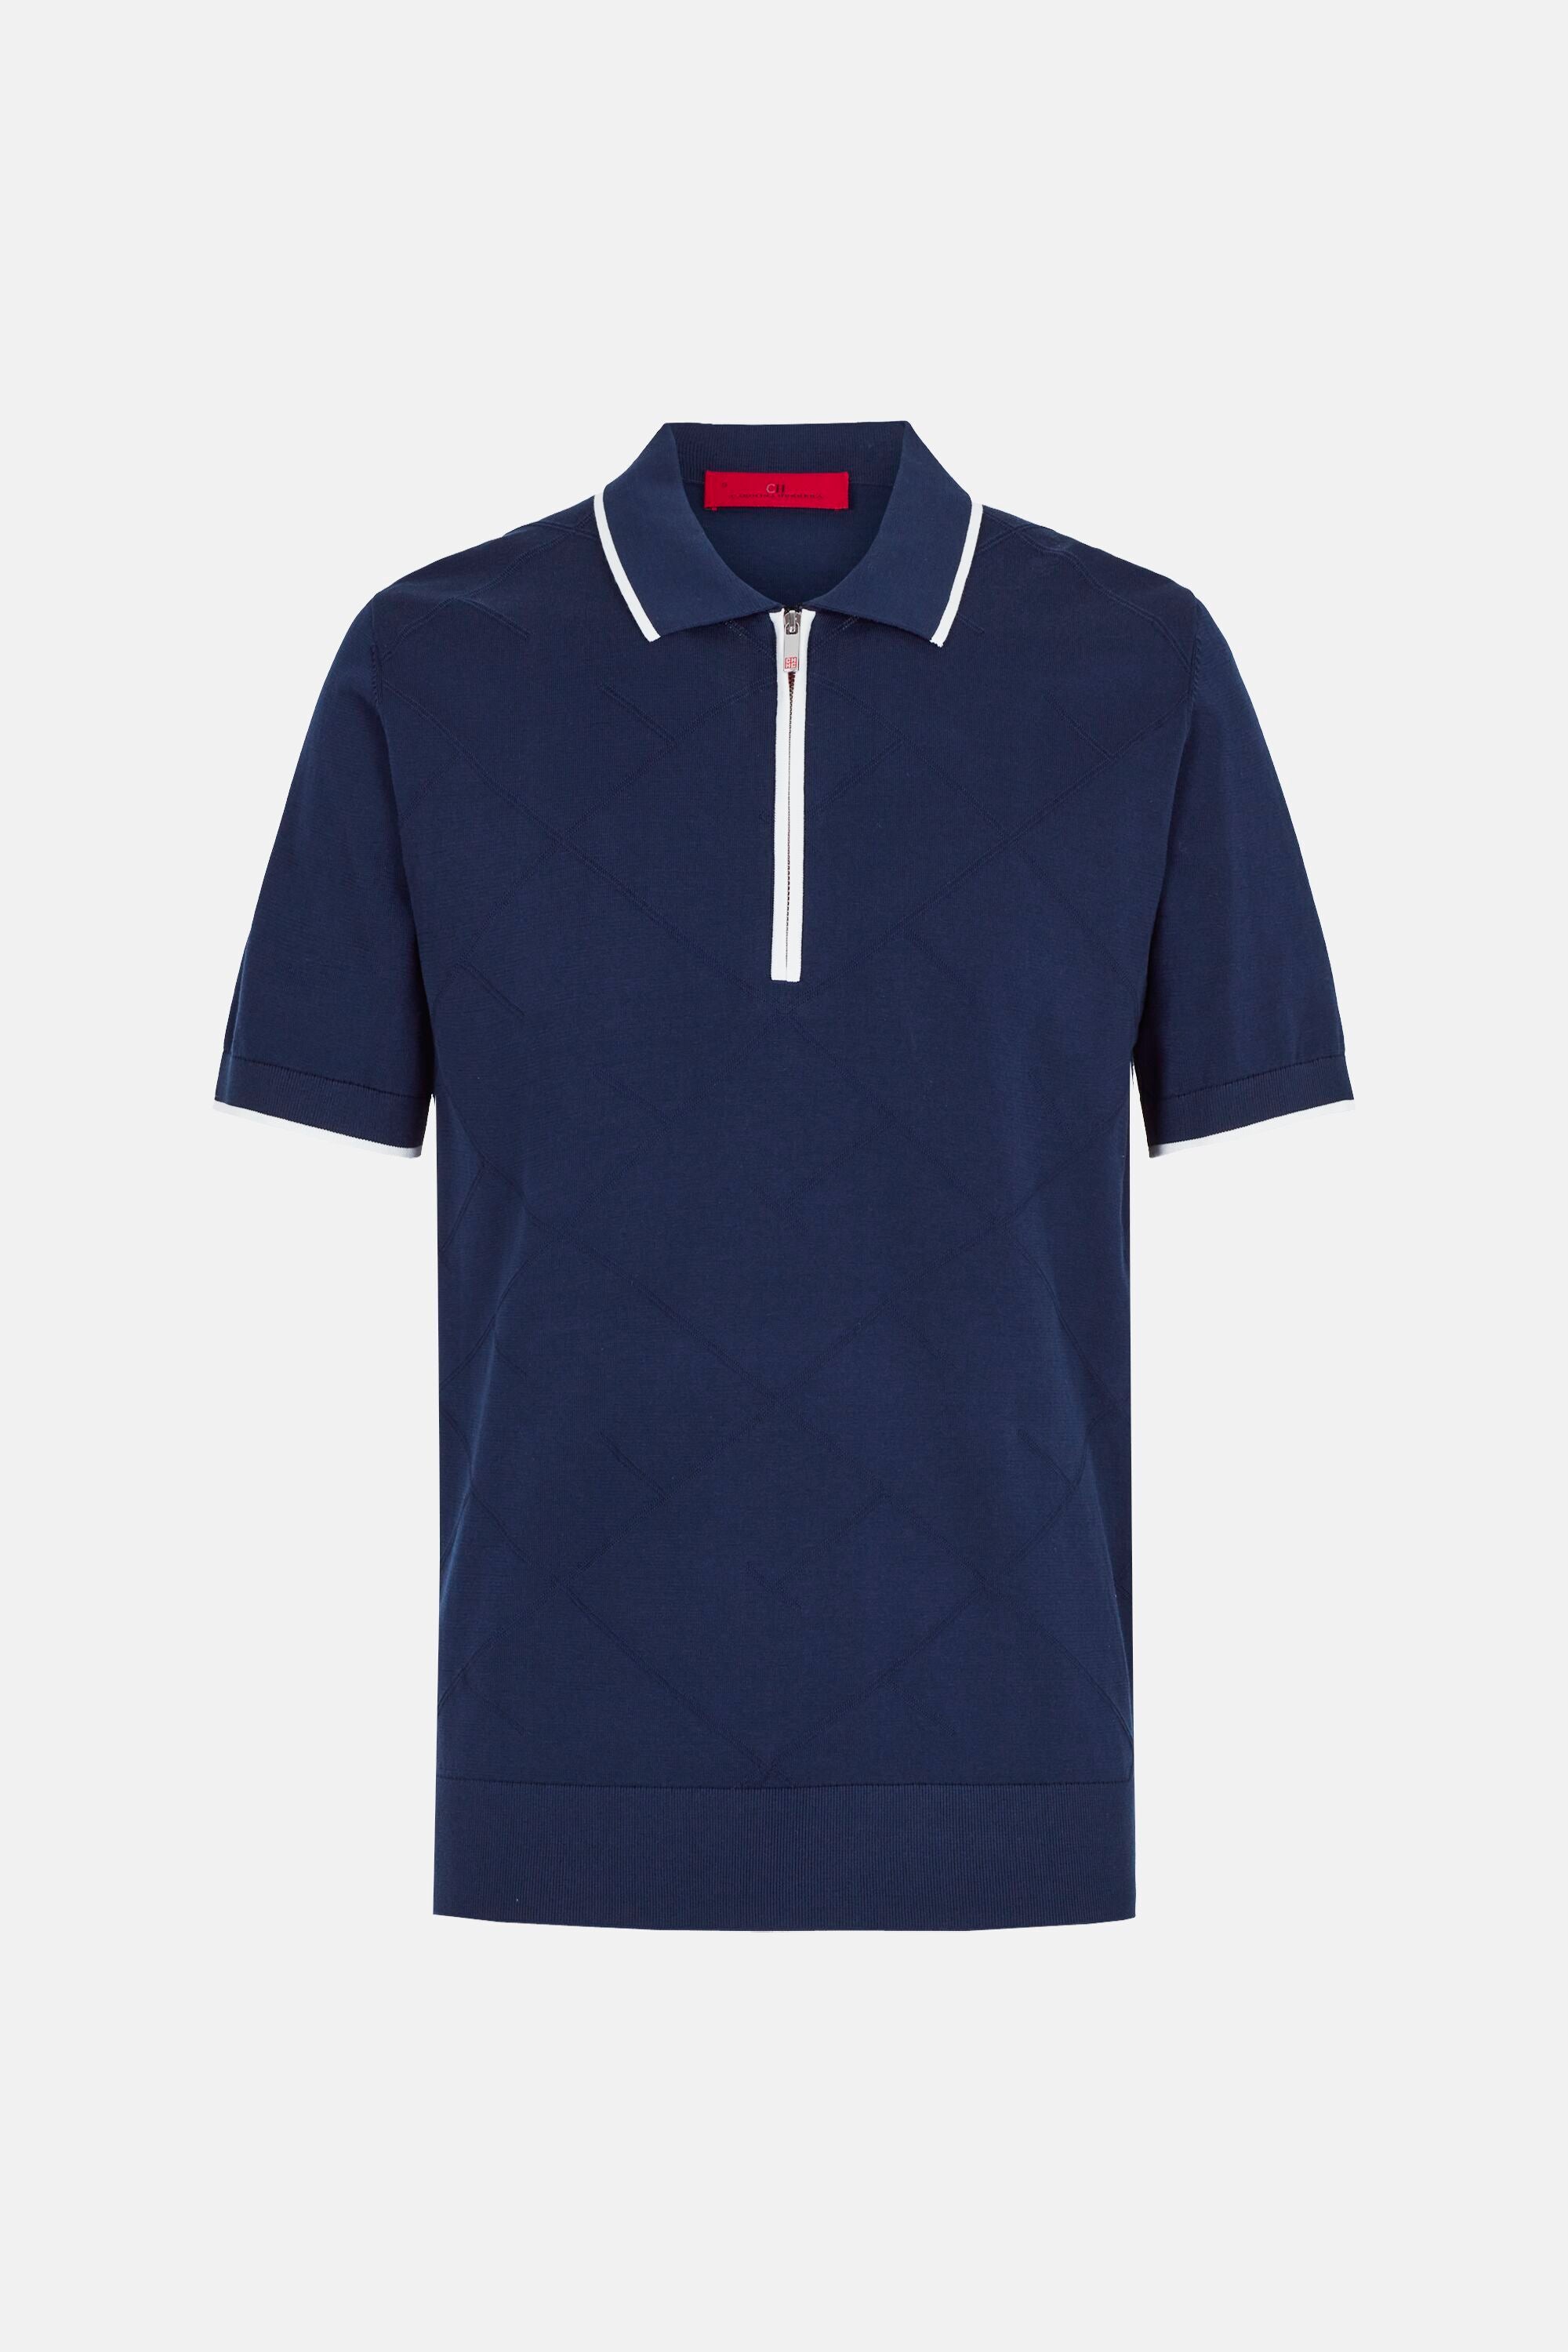 CH 2020 structured gassed cotton polo shirt navy - CH Carolina Herrera  United States | Poloshirts